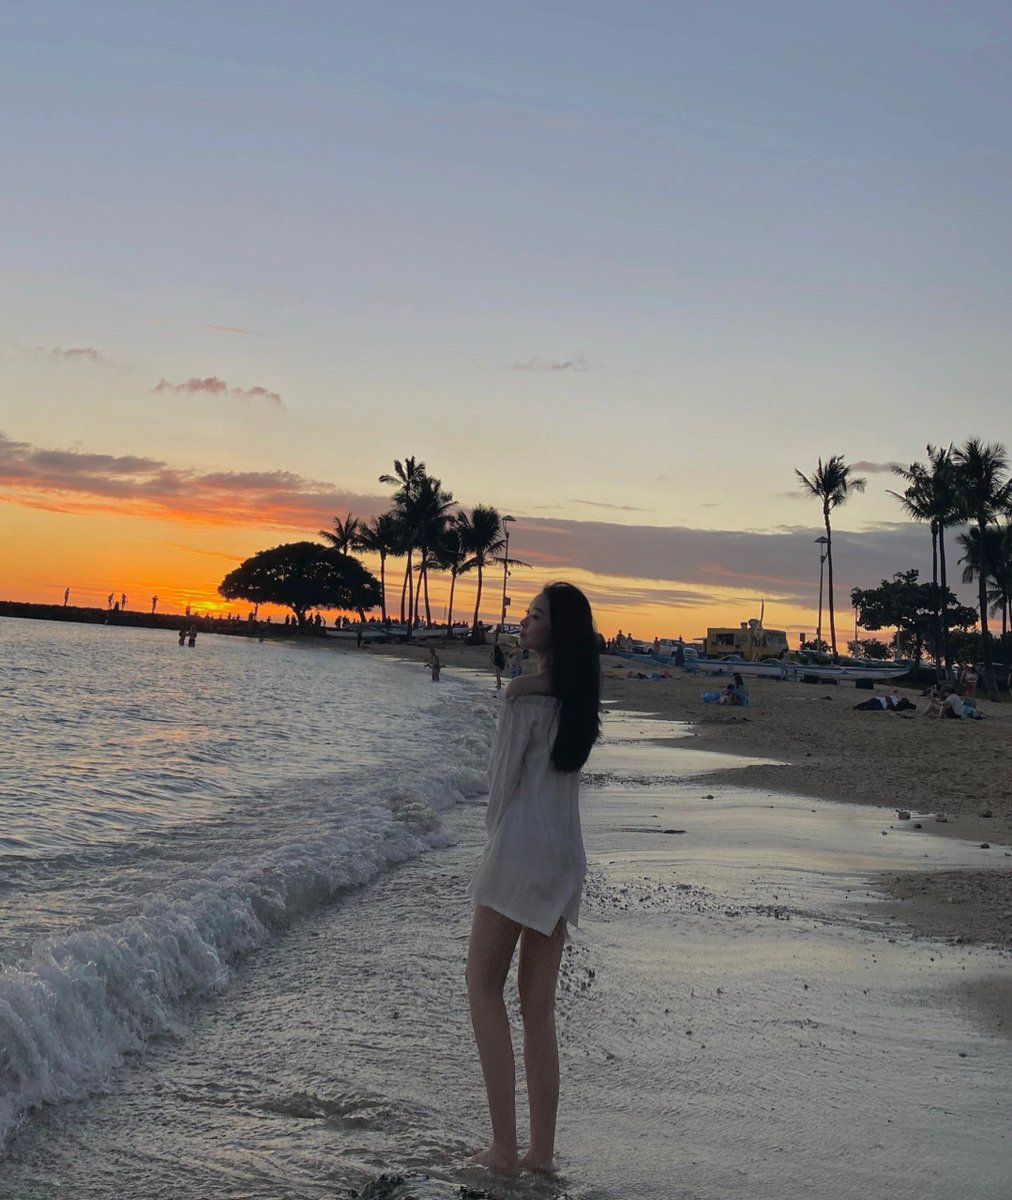 Blow 10,000 times on the beach #sunset #seasidesunset #photoshoot #travel #travel #hawaiitravel #vacationwear #beachphoto #slightlychubbygirlwear #hawaiibeach